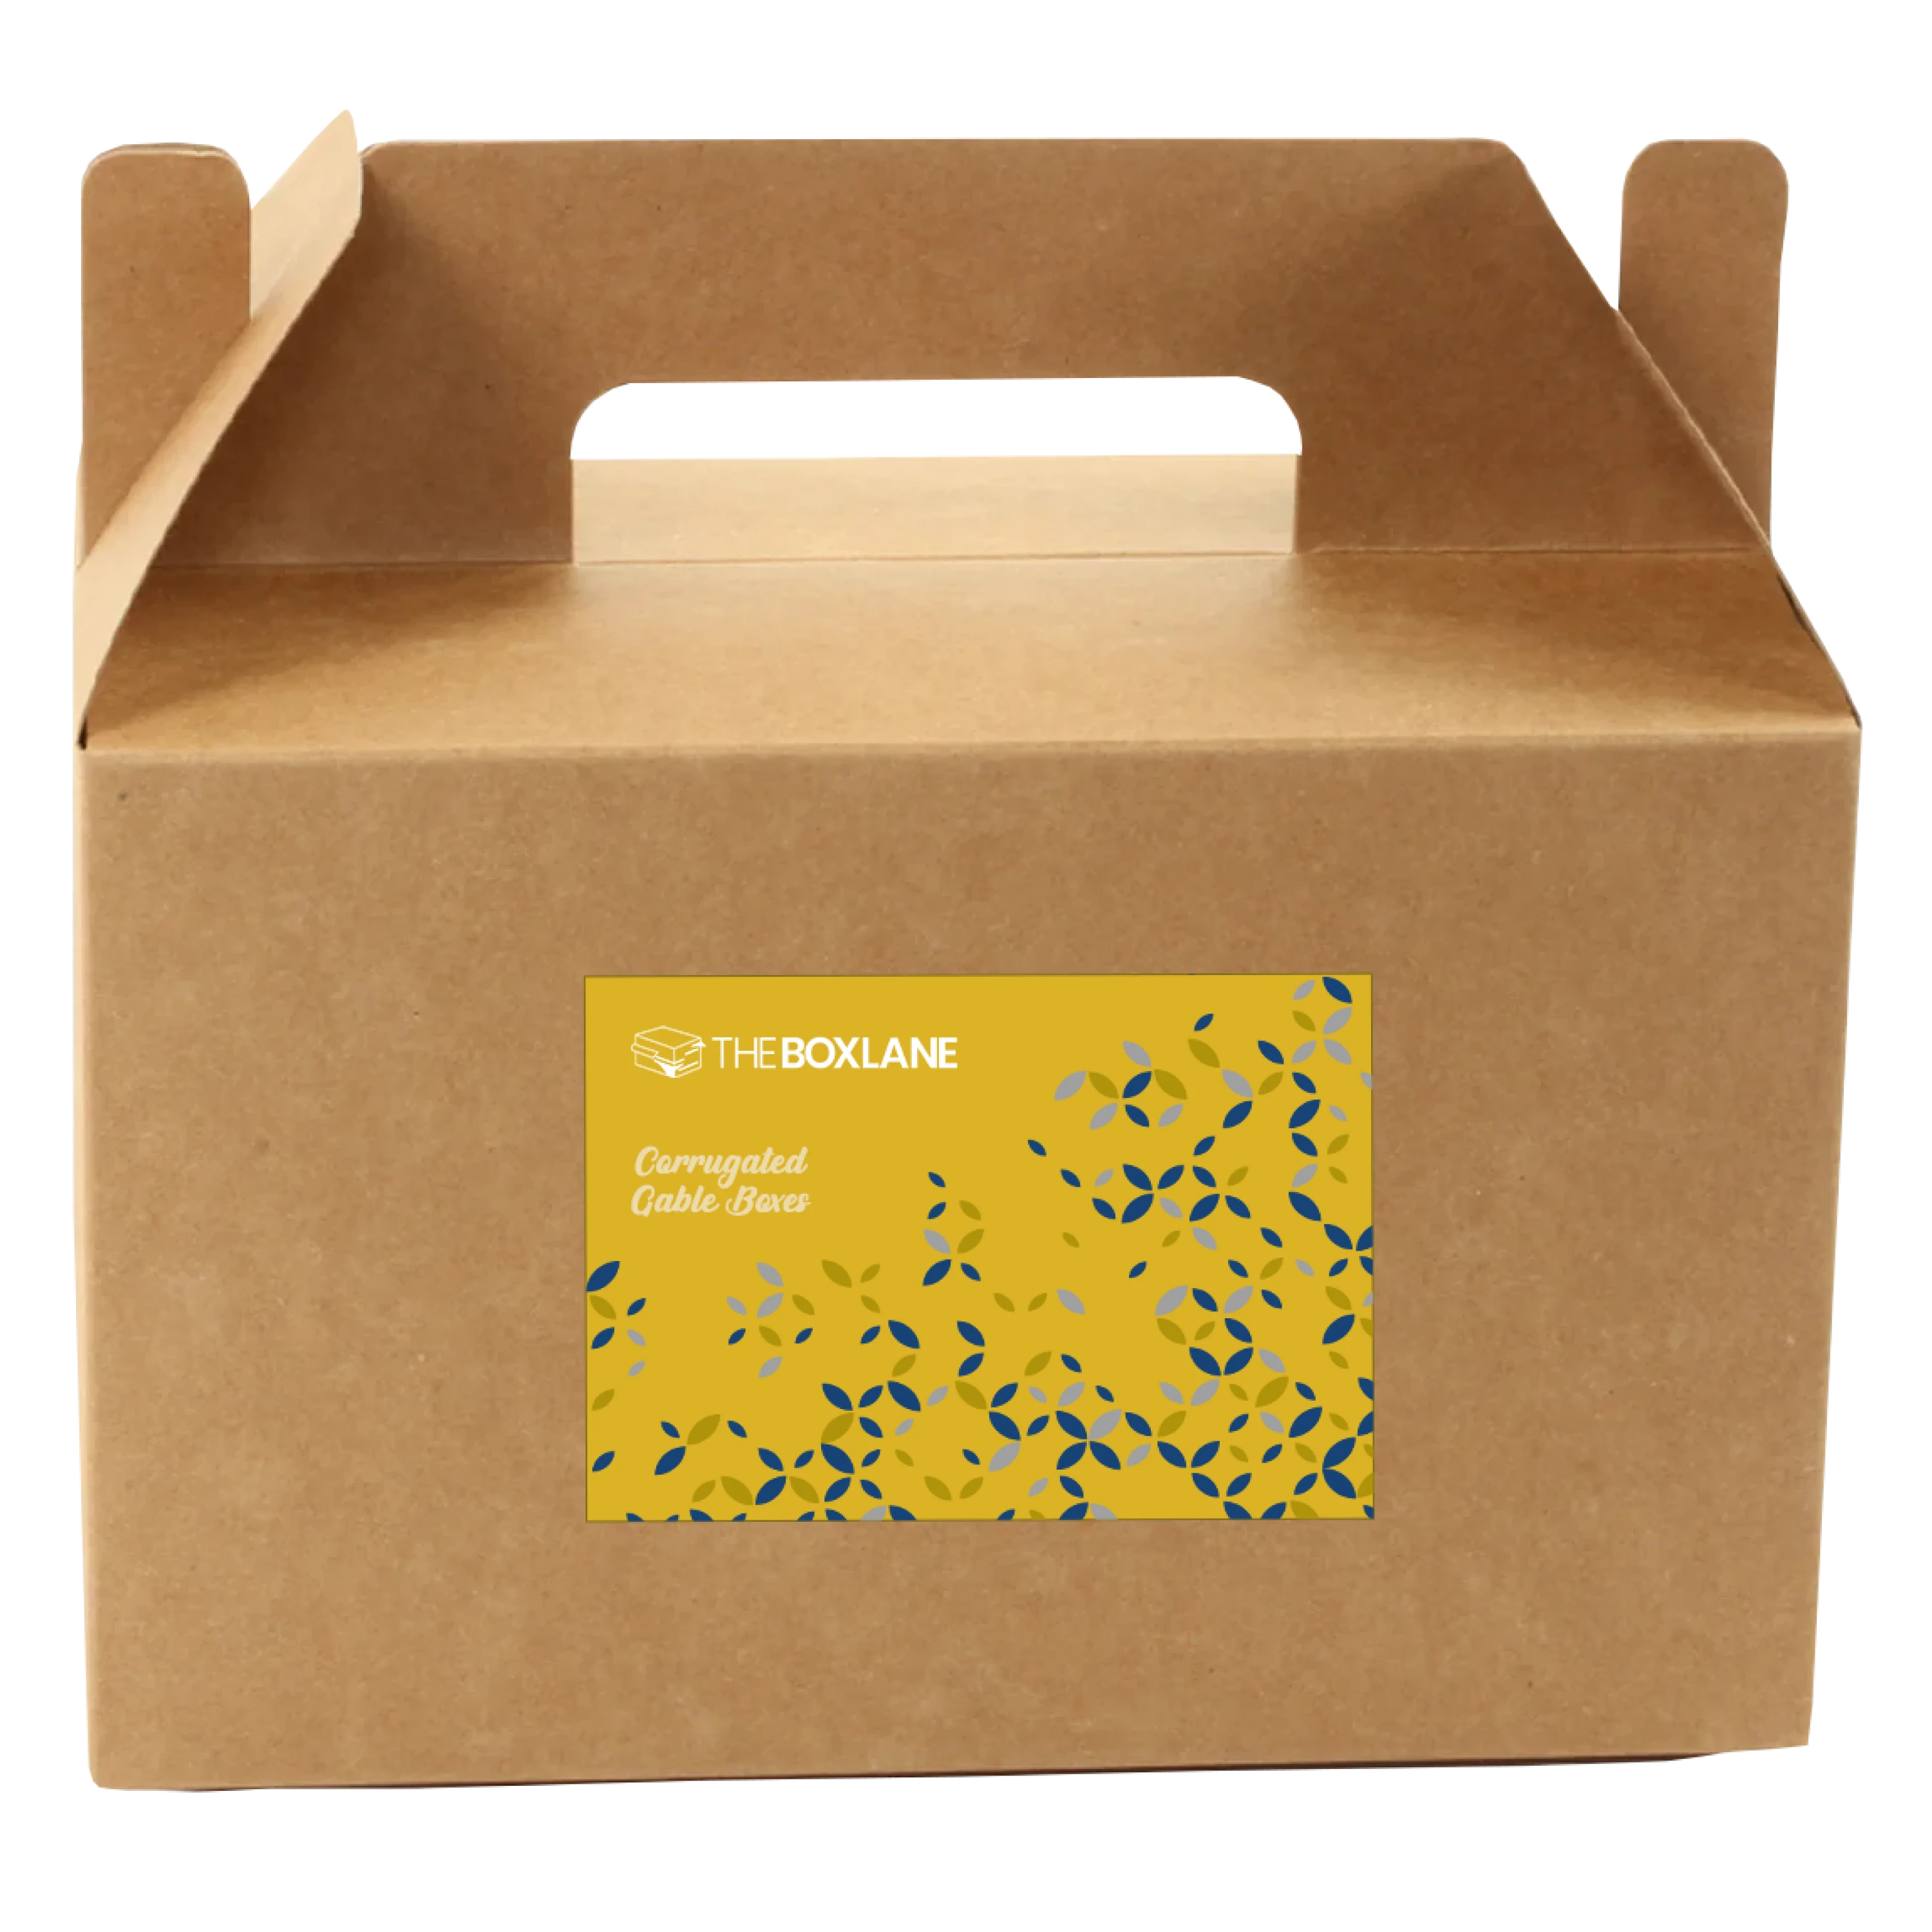 Carousel Corrugated Gable Boxes packaging image 1 | The Box Lane